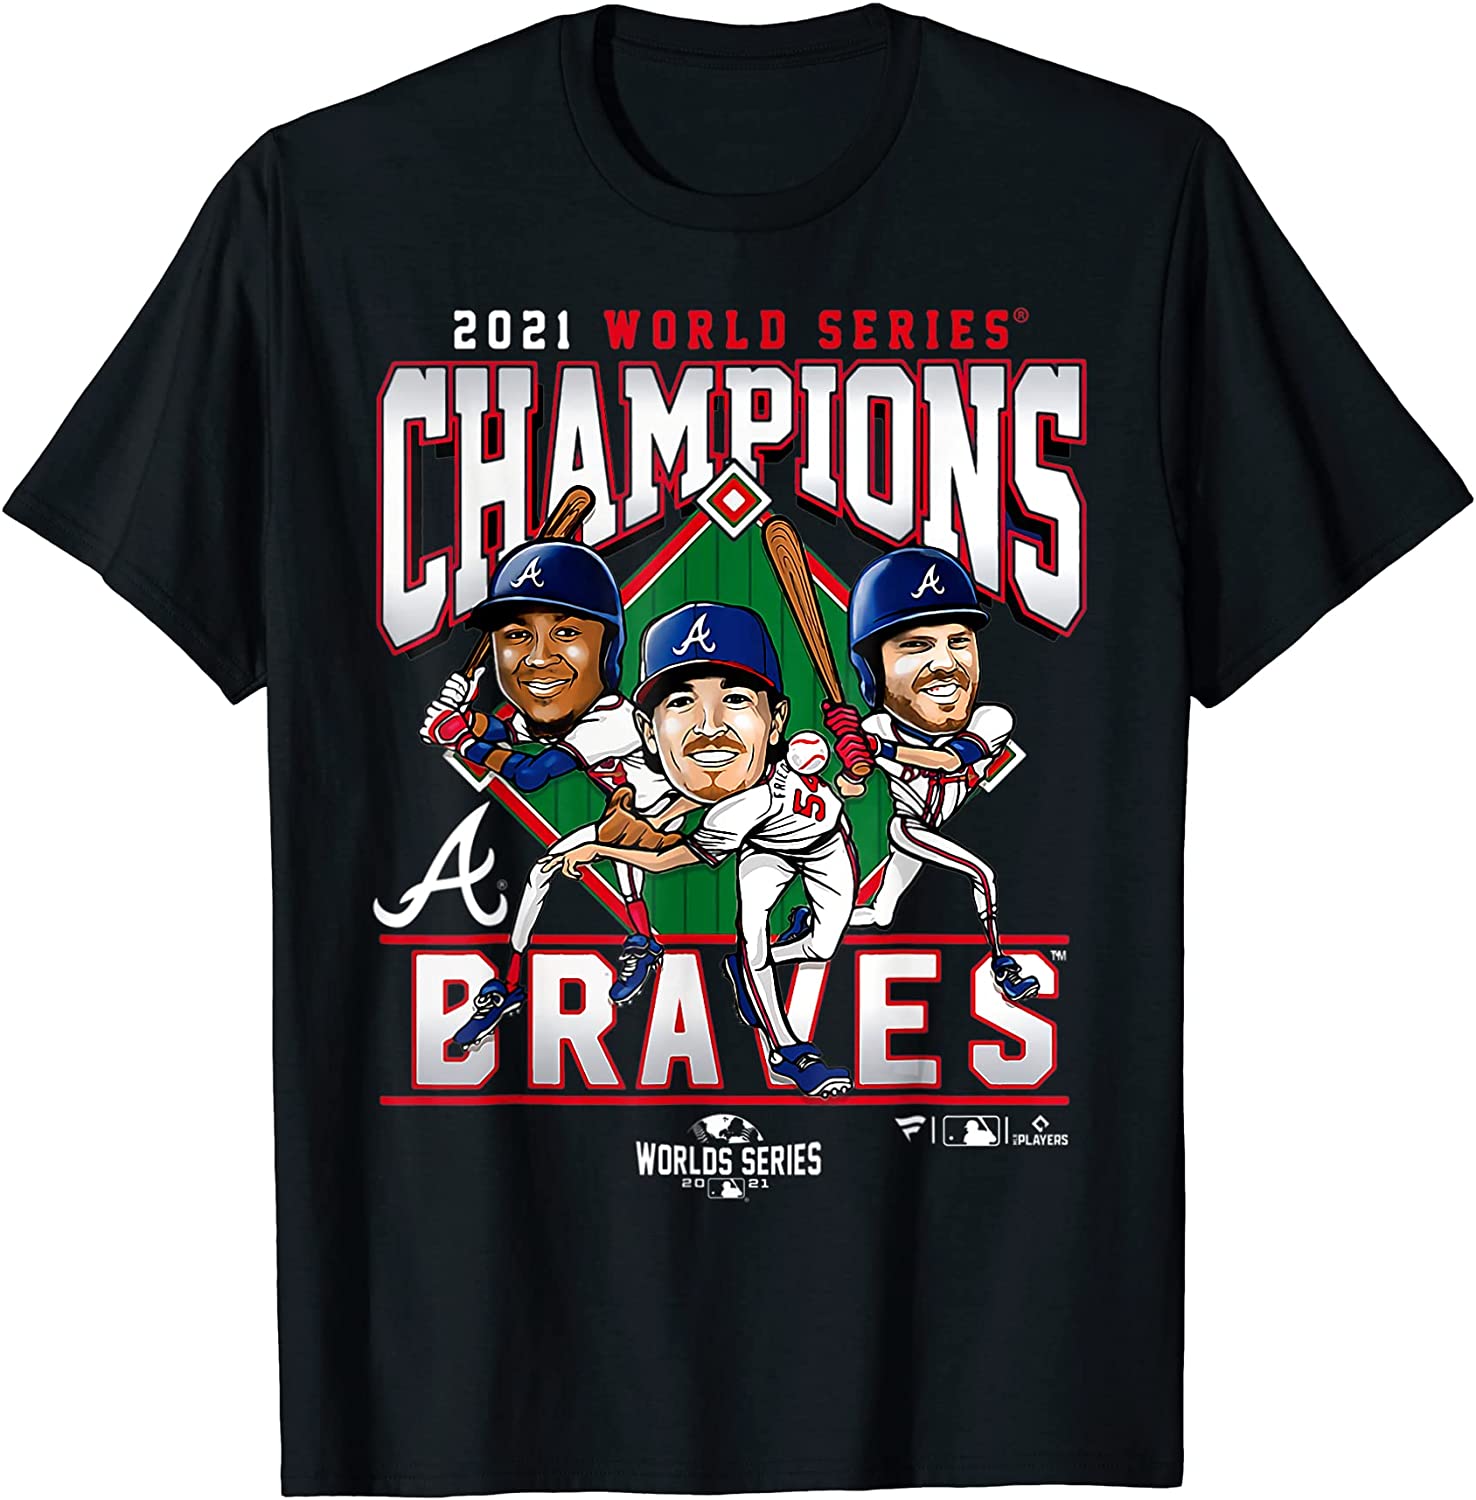 The Braves 2021 world series champions T Shirt